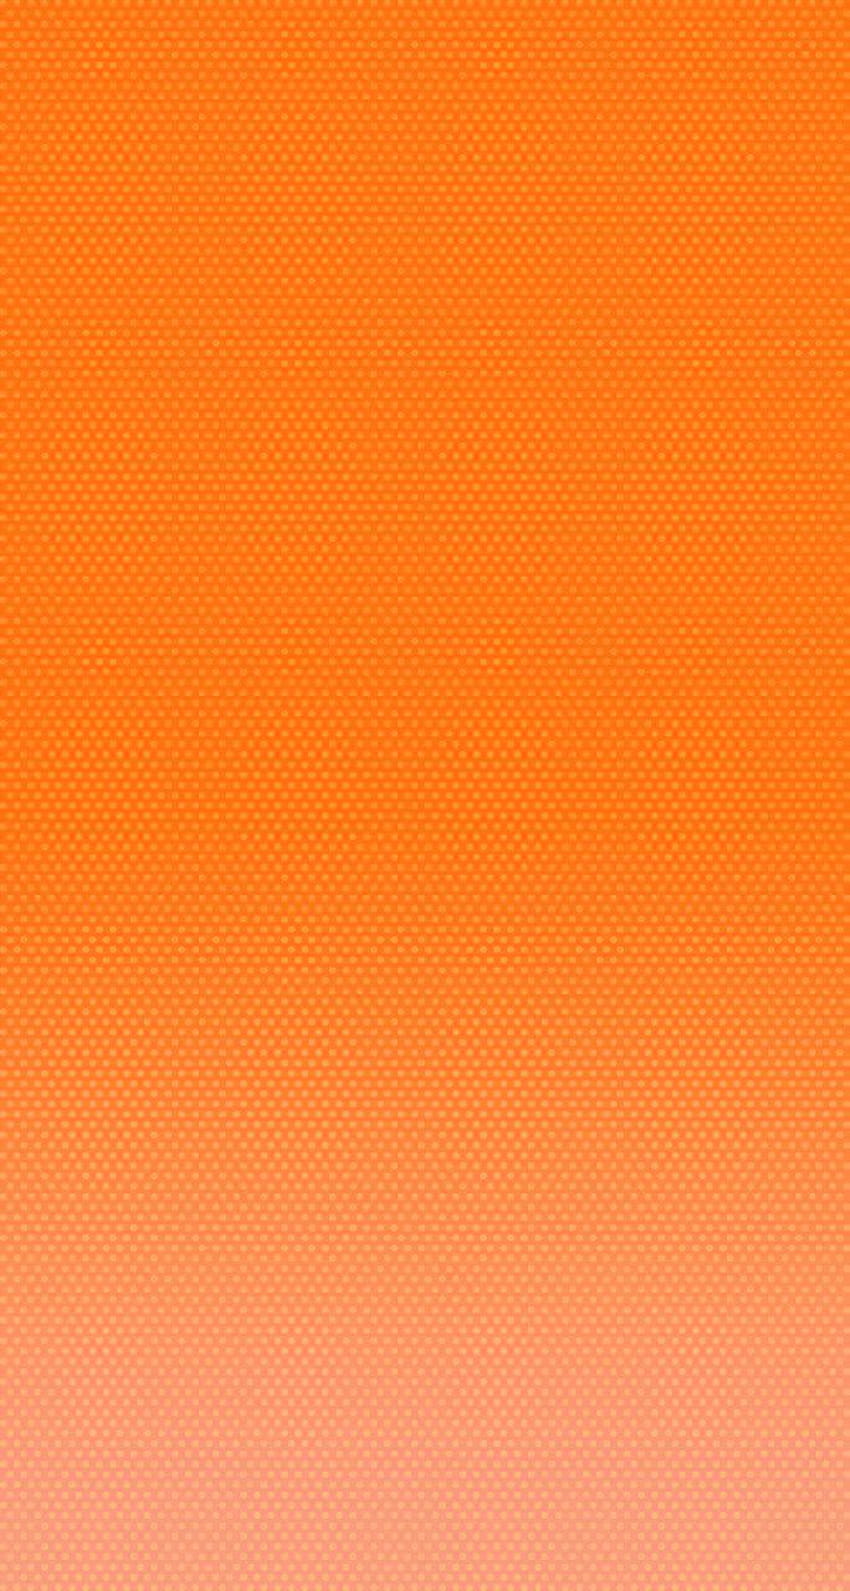 Toni's Things on Calling All Colors im Jahr 2019, orange einfach HD-Handy-Hintergrundbild